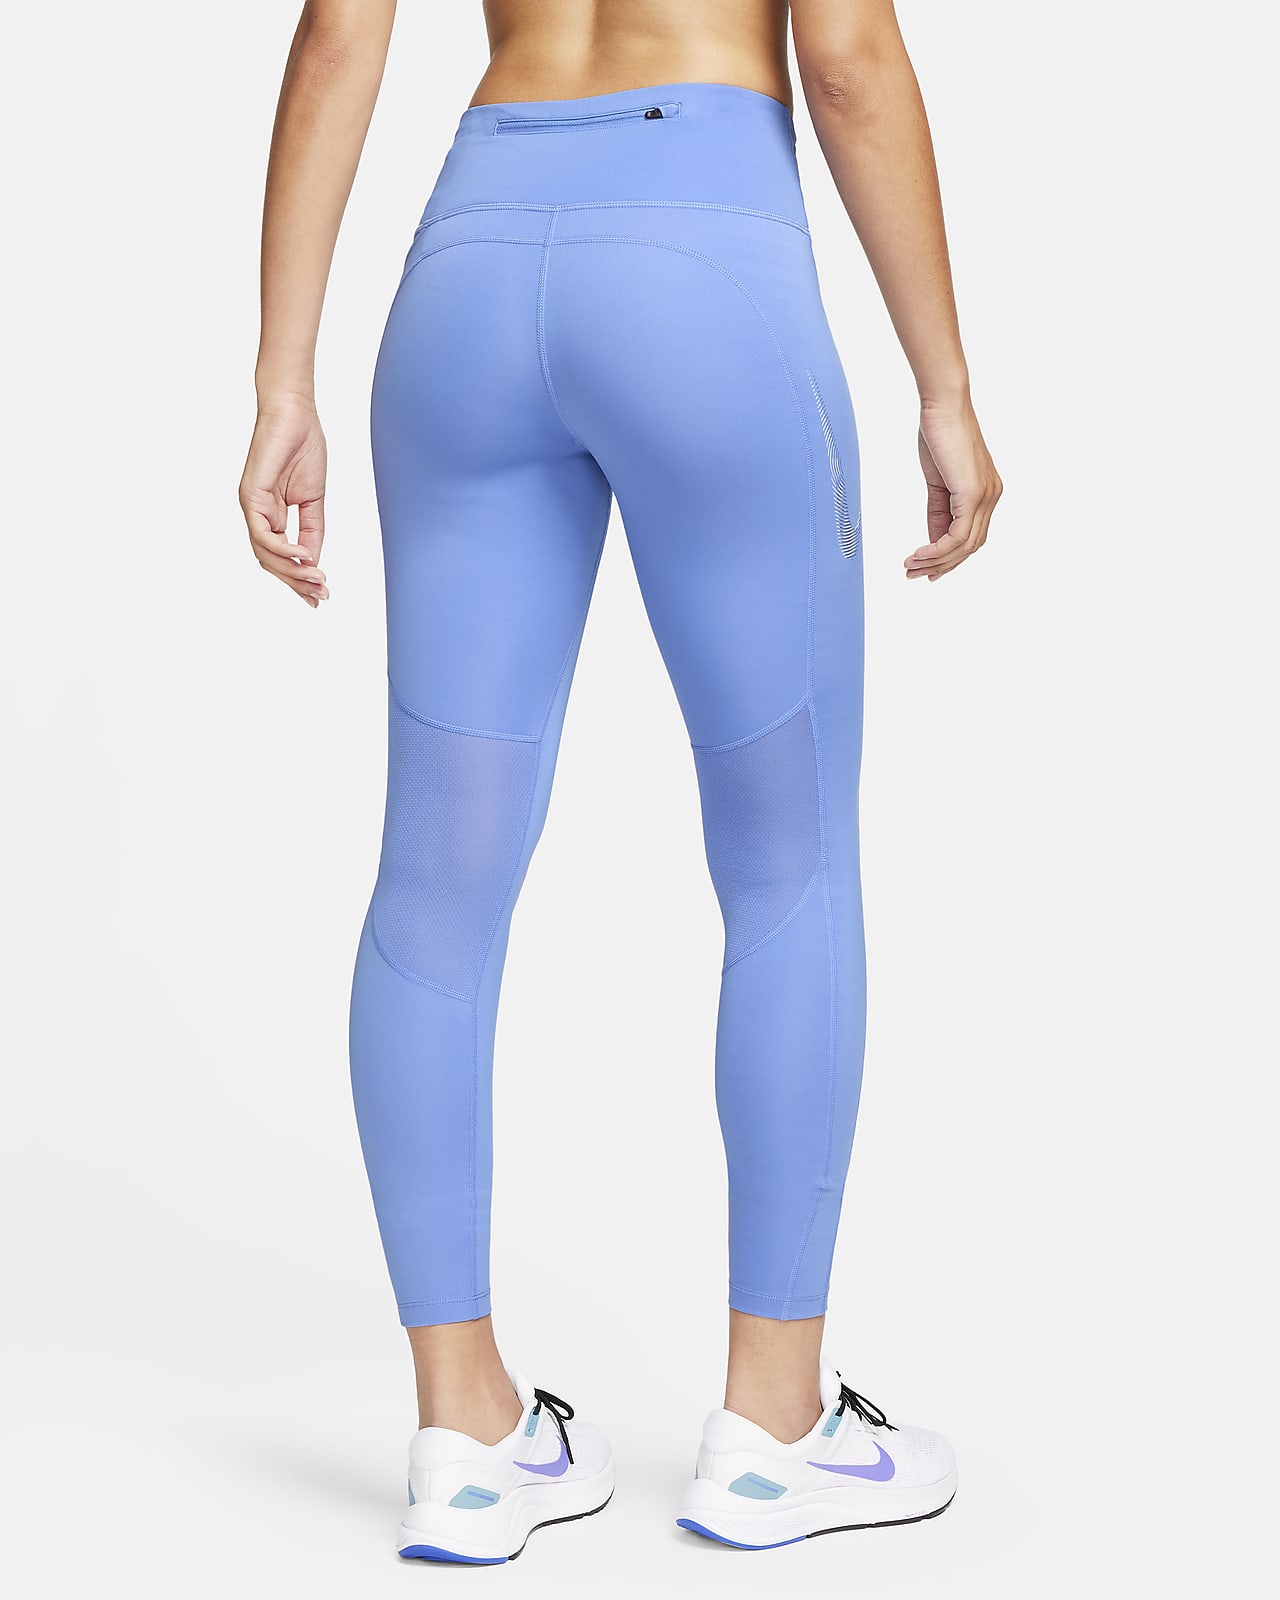 Spandex/Lycra Leggings - 15 Colors - Mid waist Tight Sexy Stocking Pantyhose